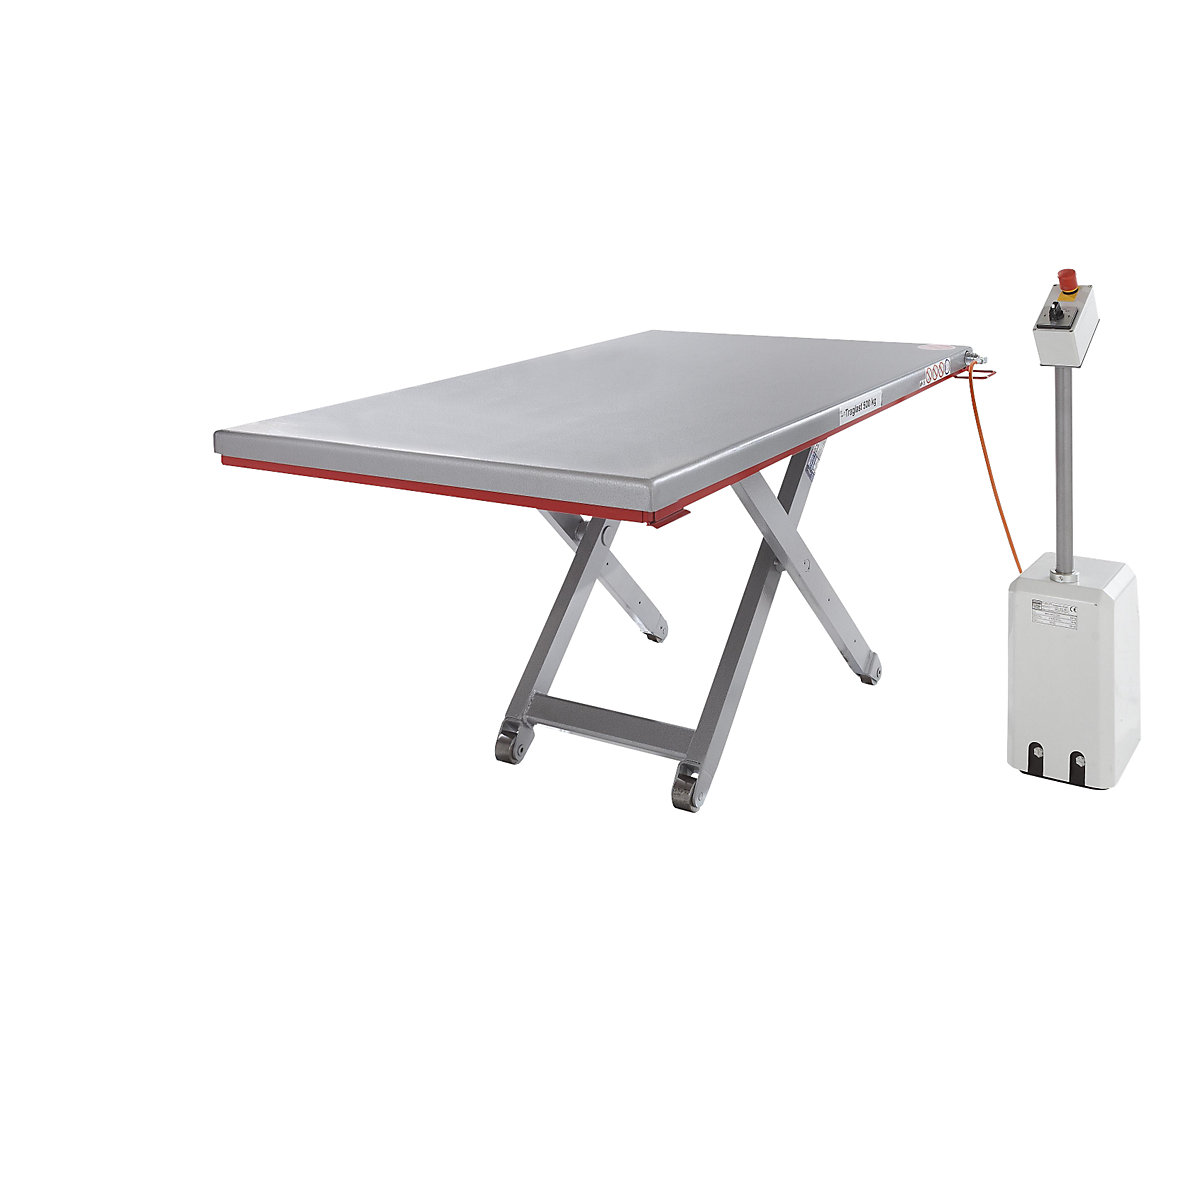 Low profile lift table, G series – Flexlift